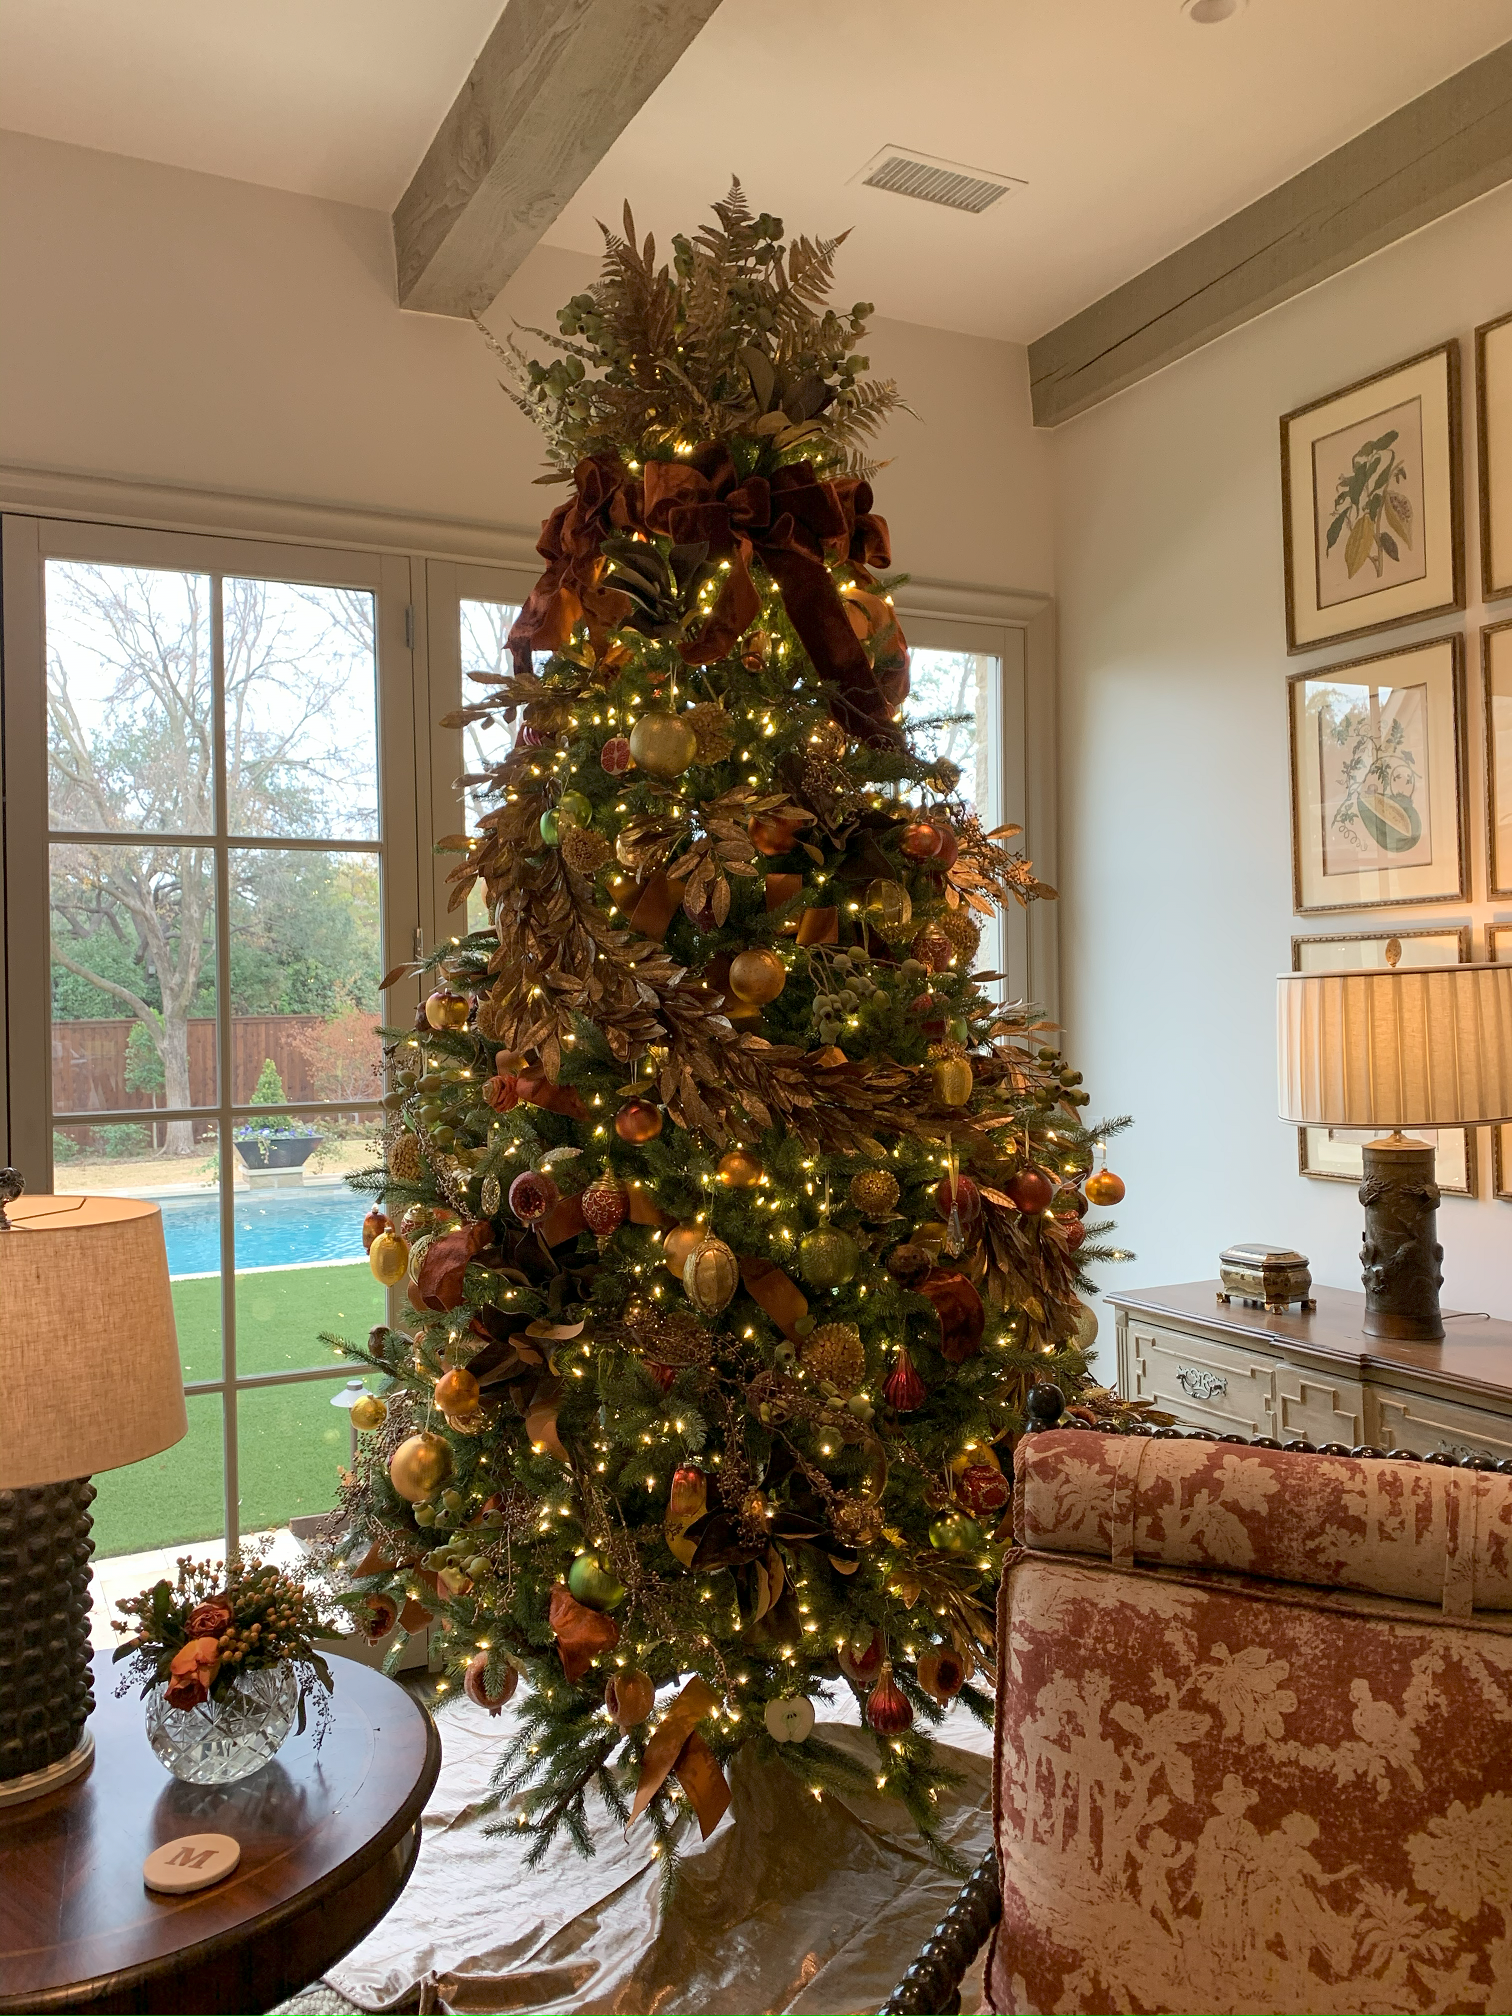 https://images.squarespace-cdn.com/content/v1/555cbed8e4b0c2909e97a944/69a0cfcc-c42d-4e55-866f-2c49cddf66c7/Dallas-home-Christmas-tree.png